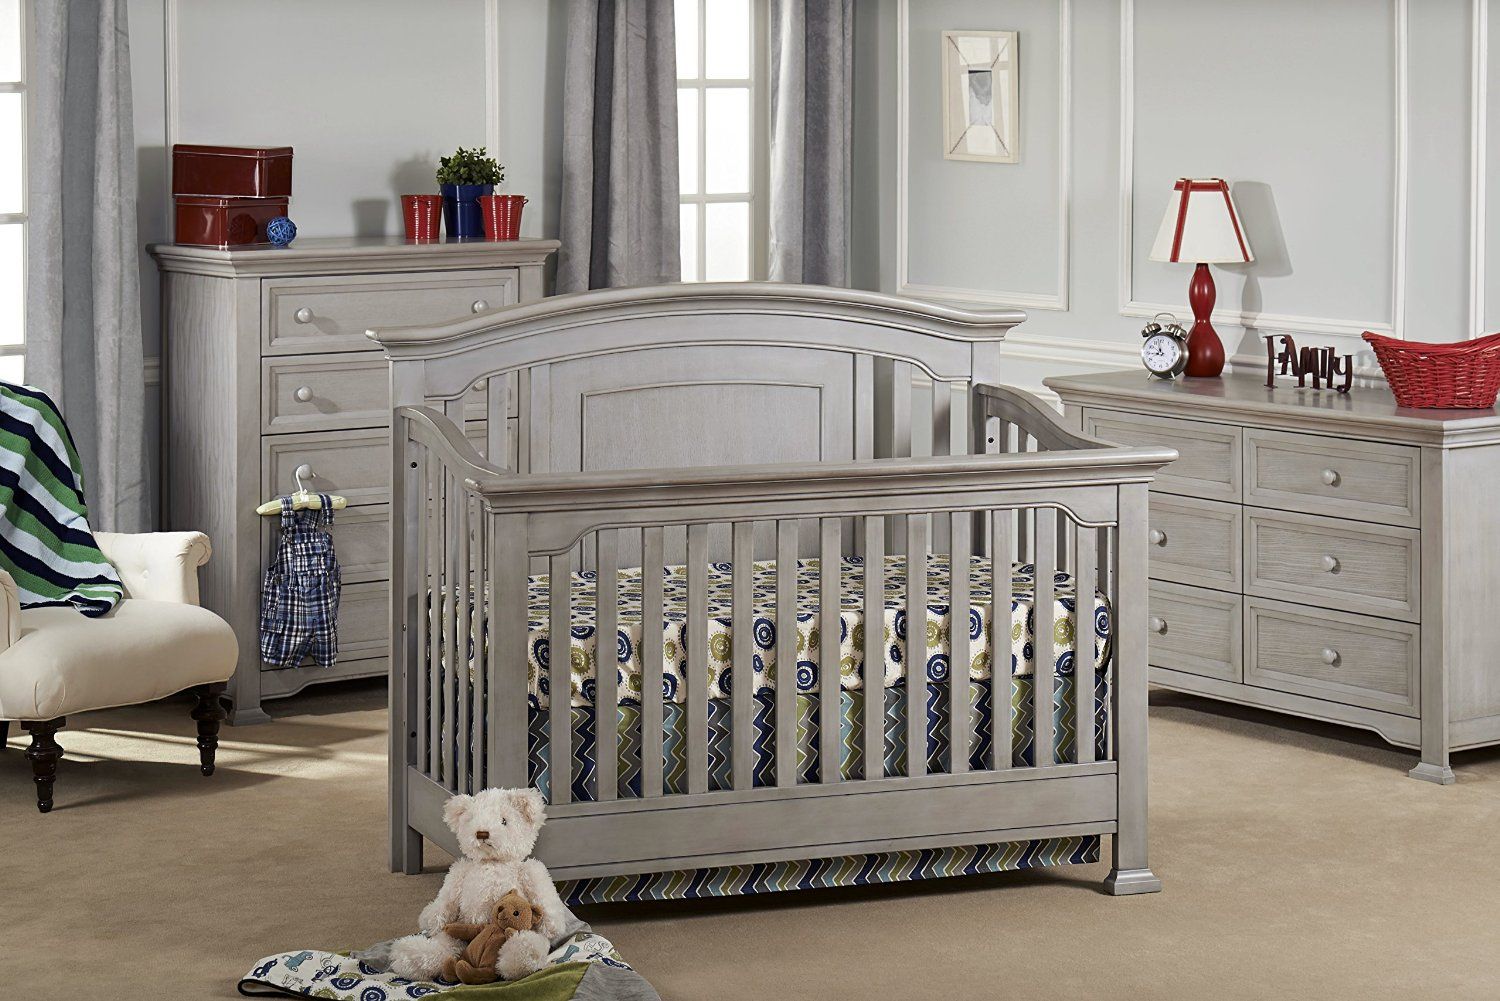 Medford Crib from Munire Baby Furniture - Project Nursery